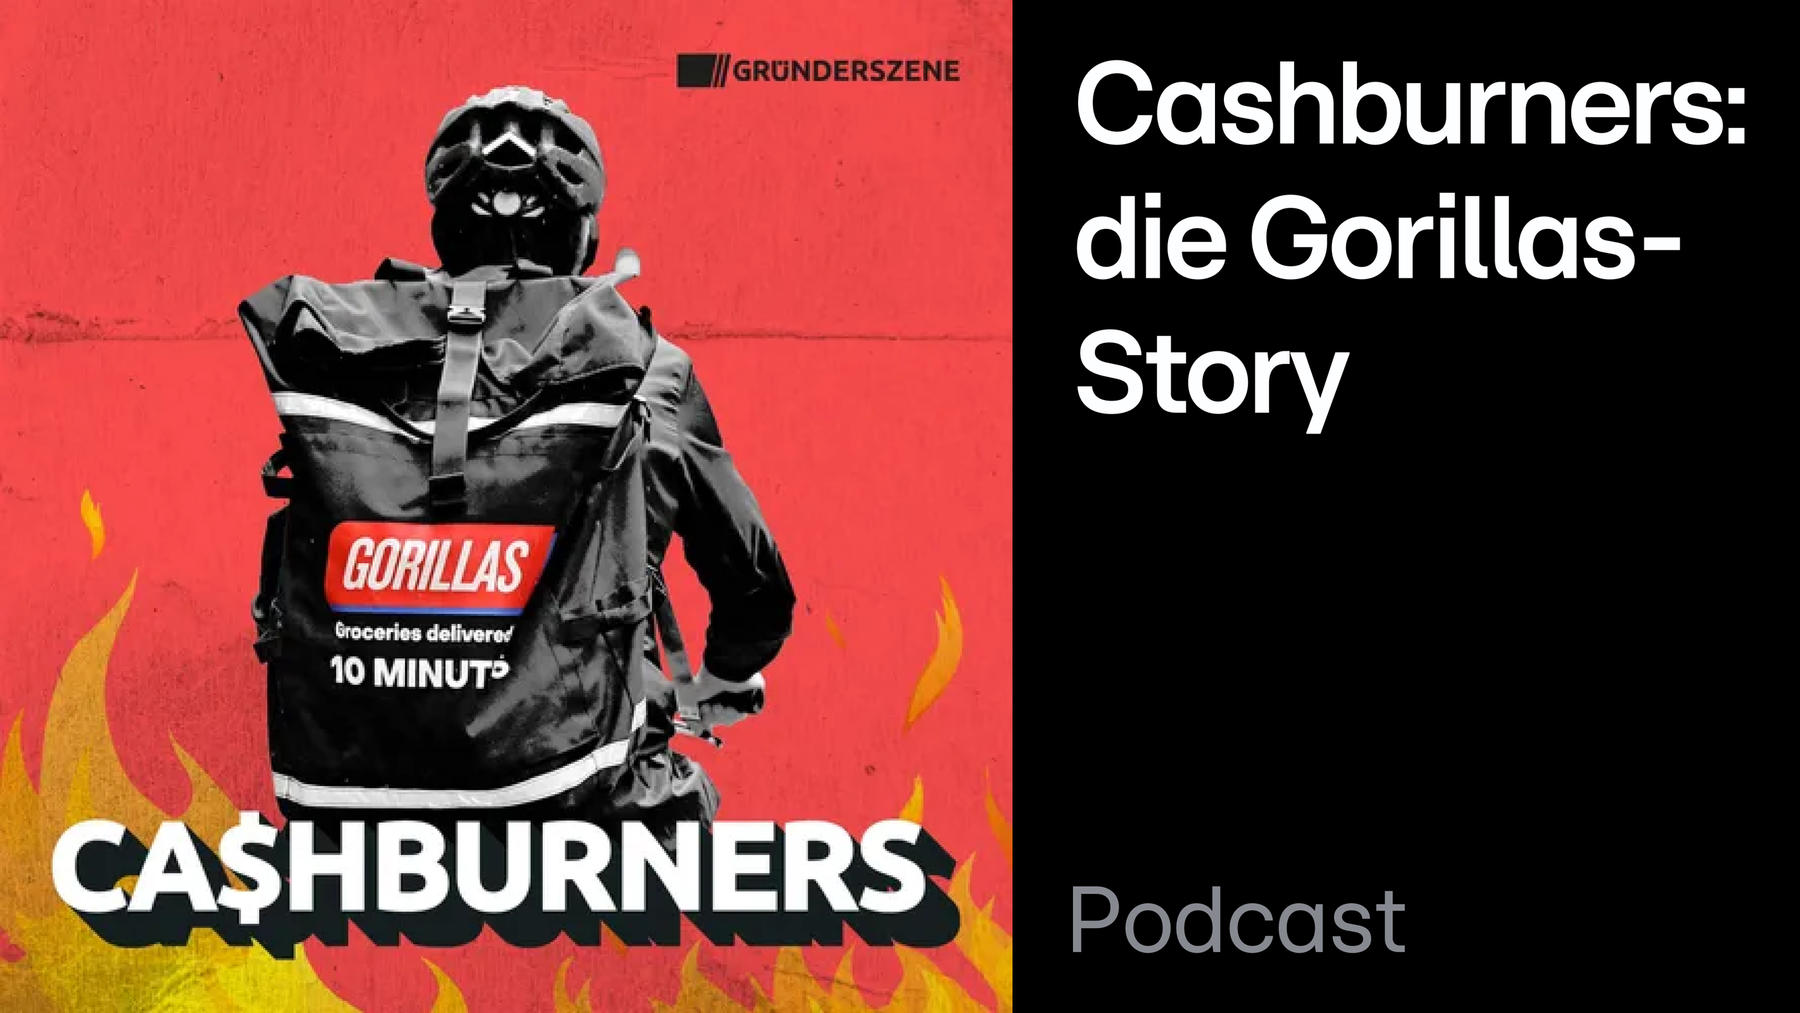 Podcast: Cashburners: die Gorillas-Story